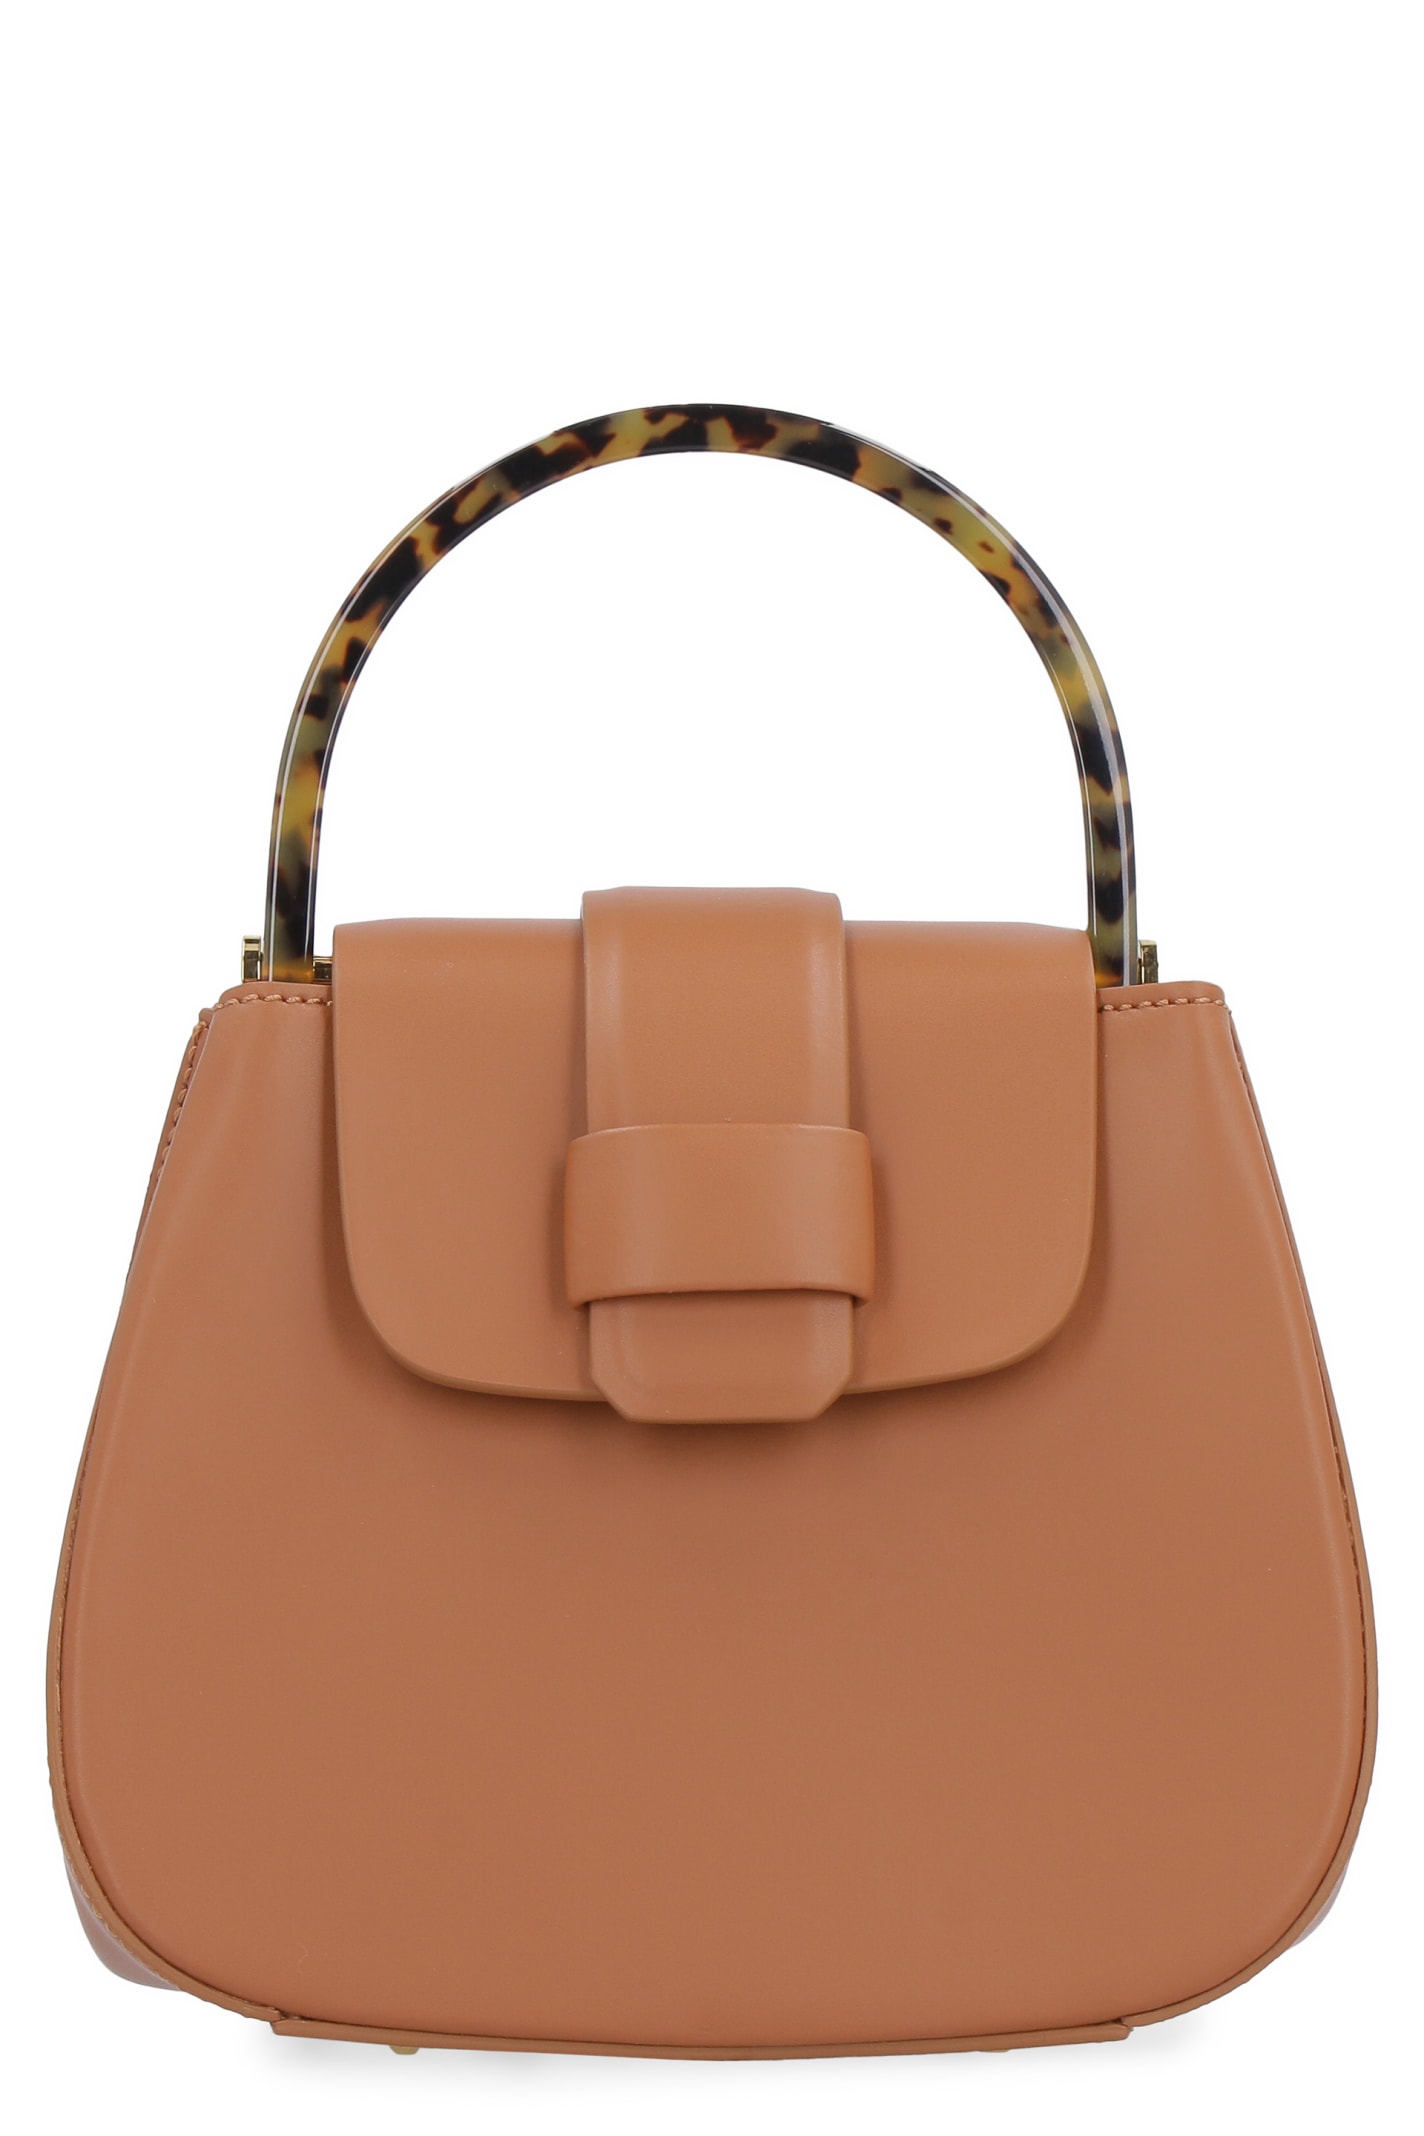 Nico Giani Myria Leather Handbag In Saddle Brown